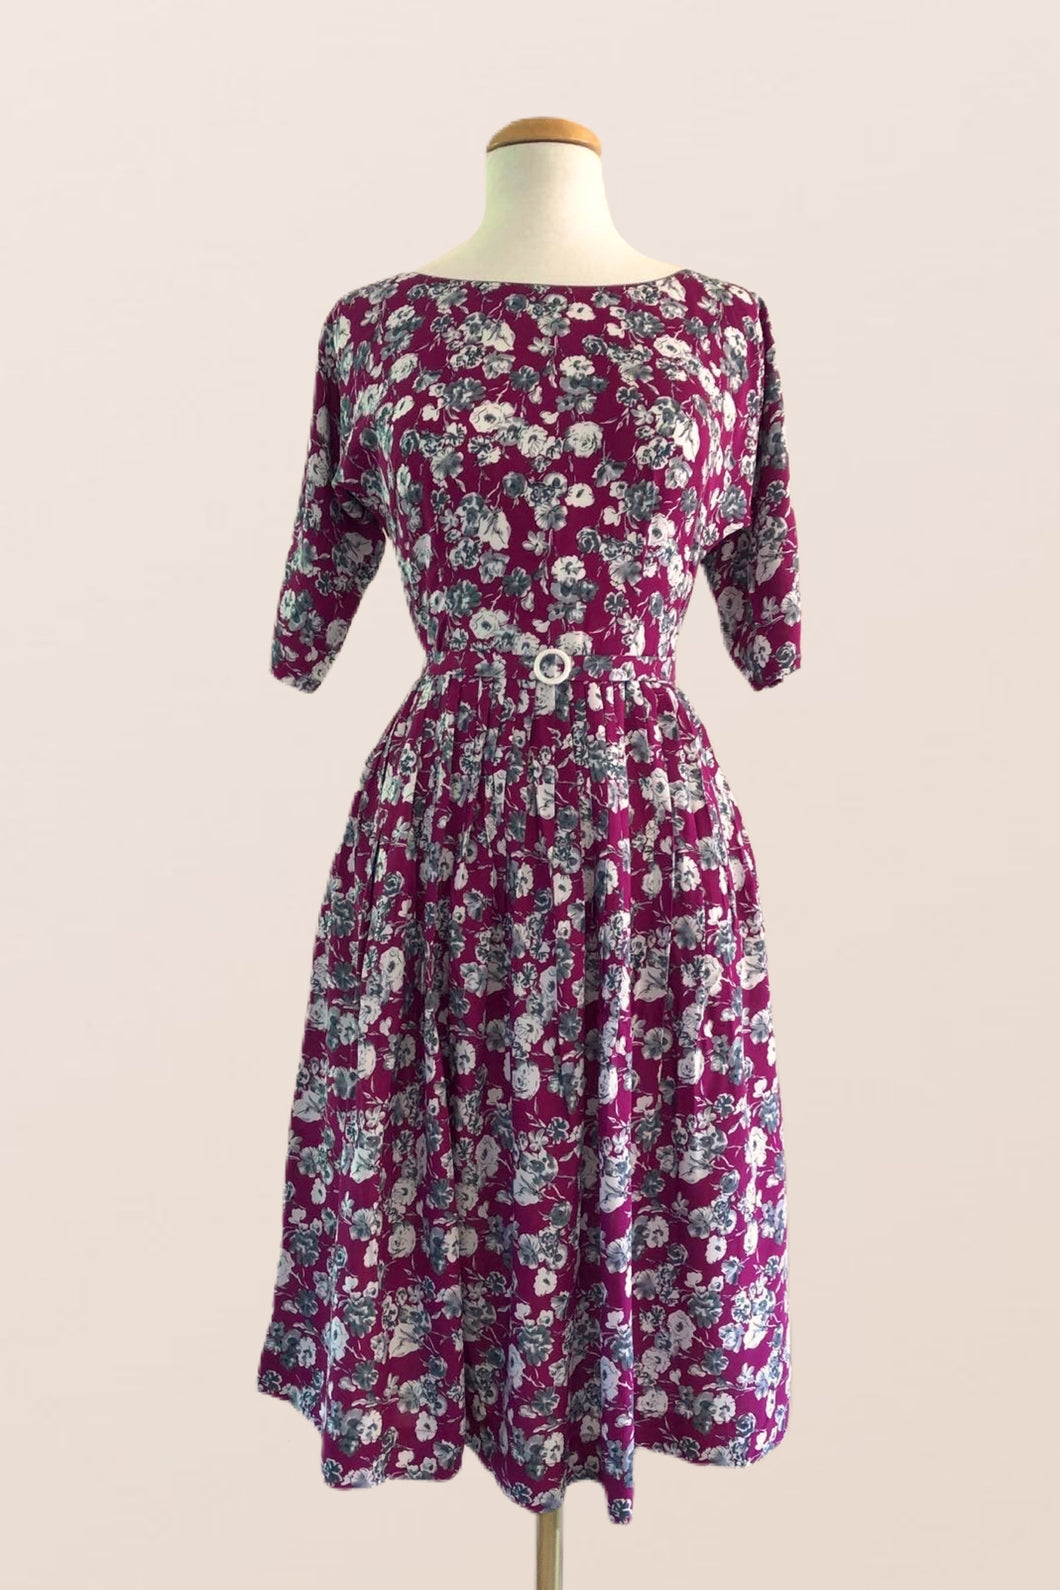 Clarissa Purple Floral Dress